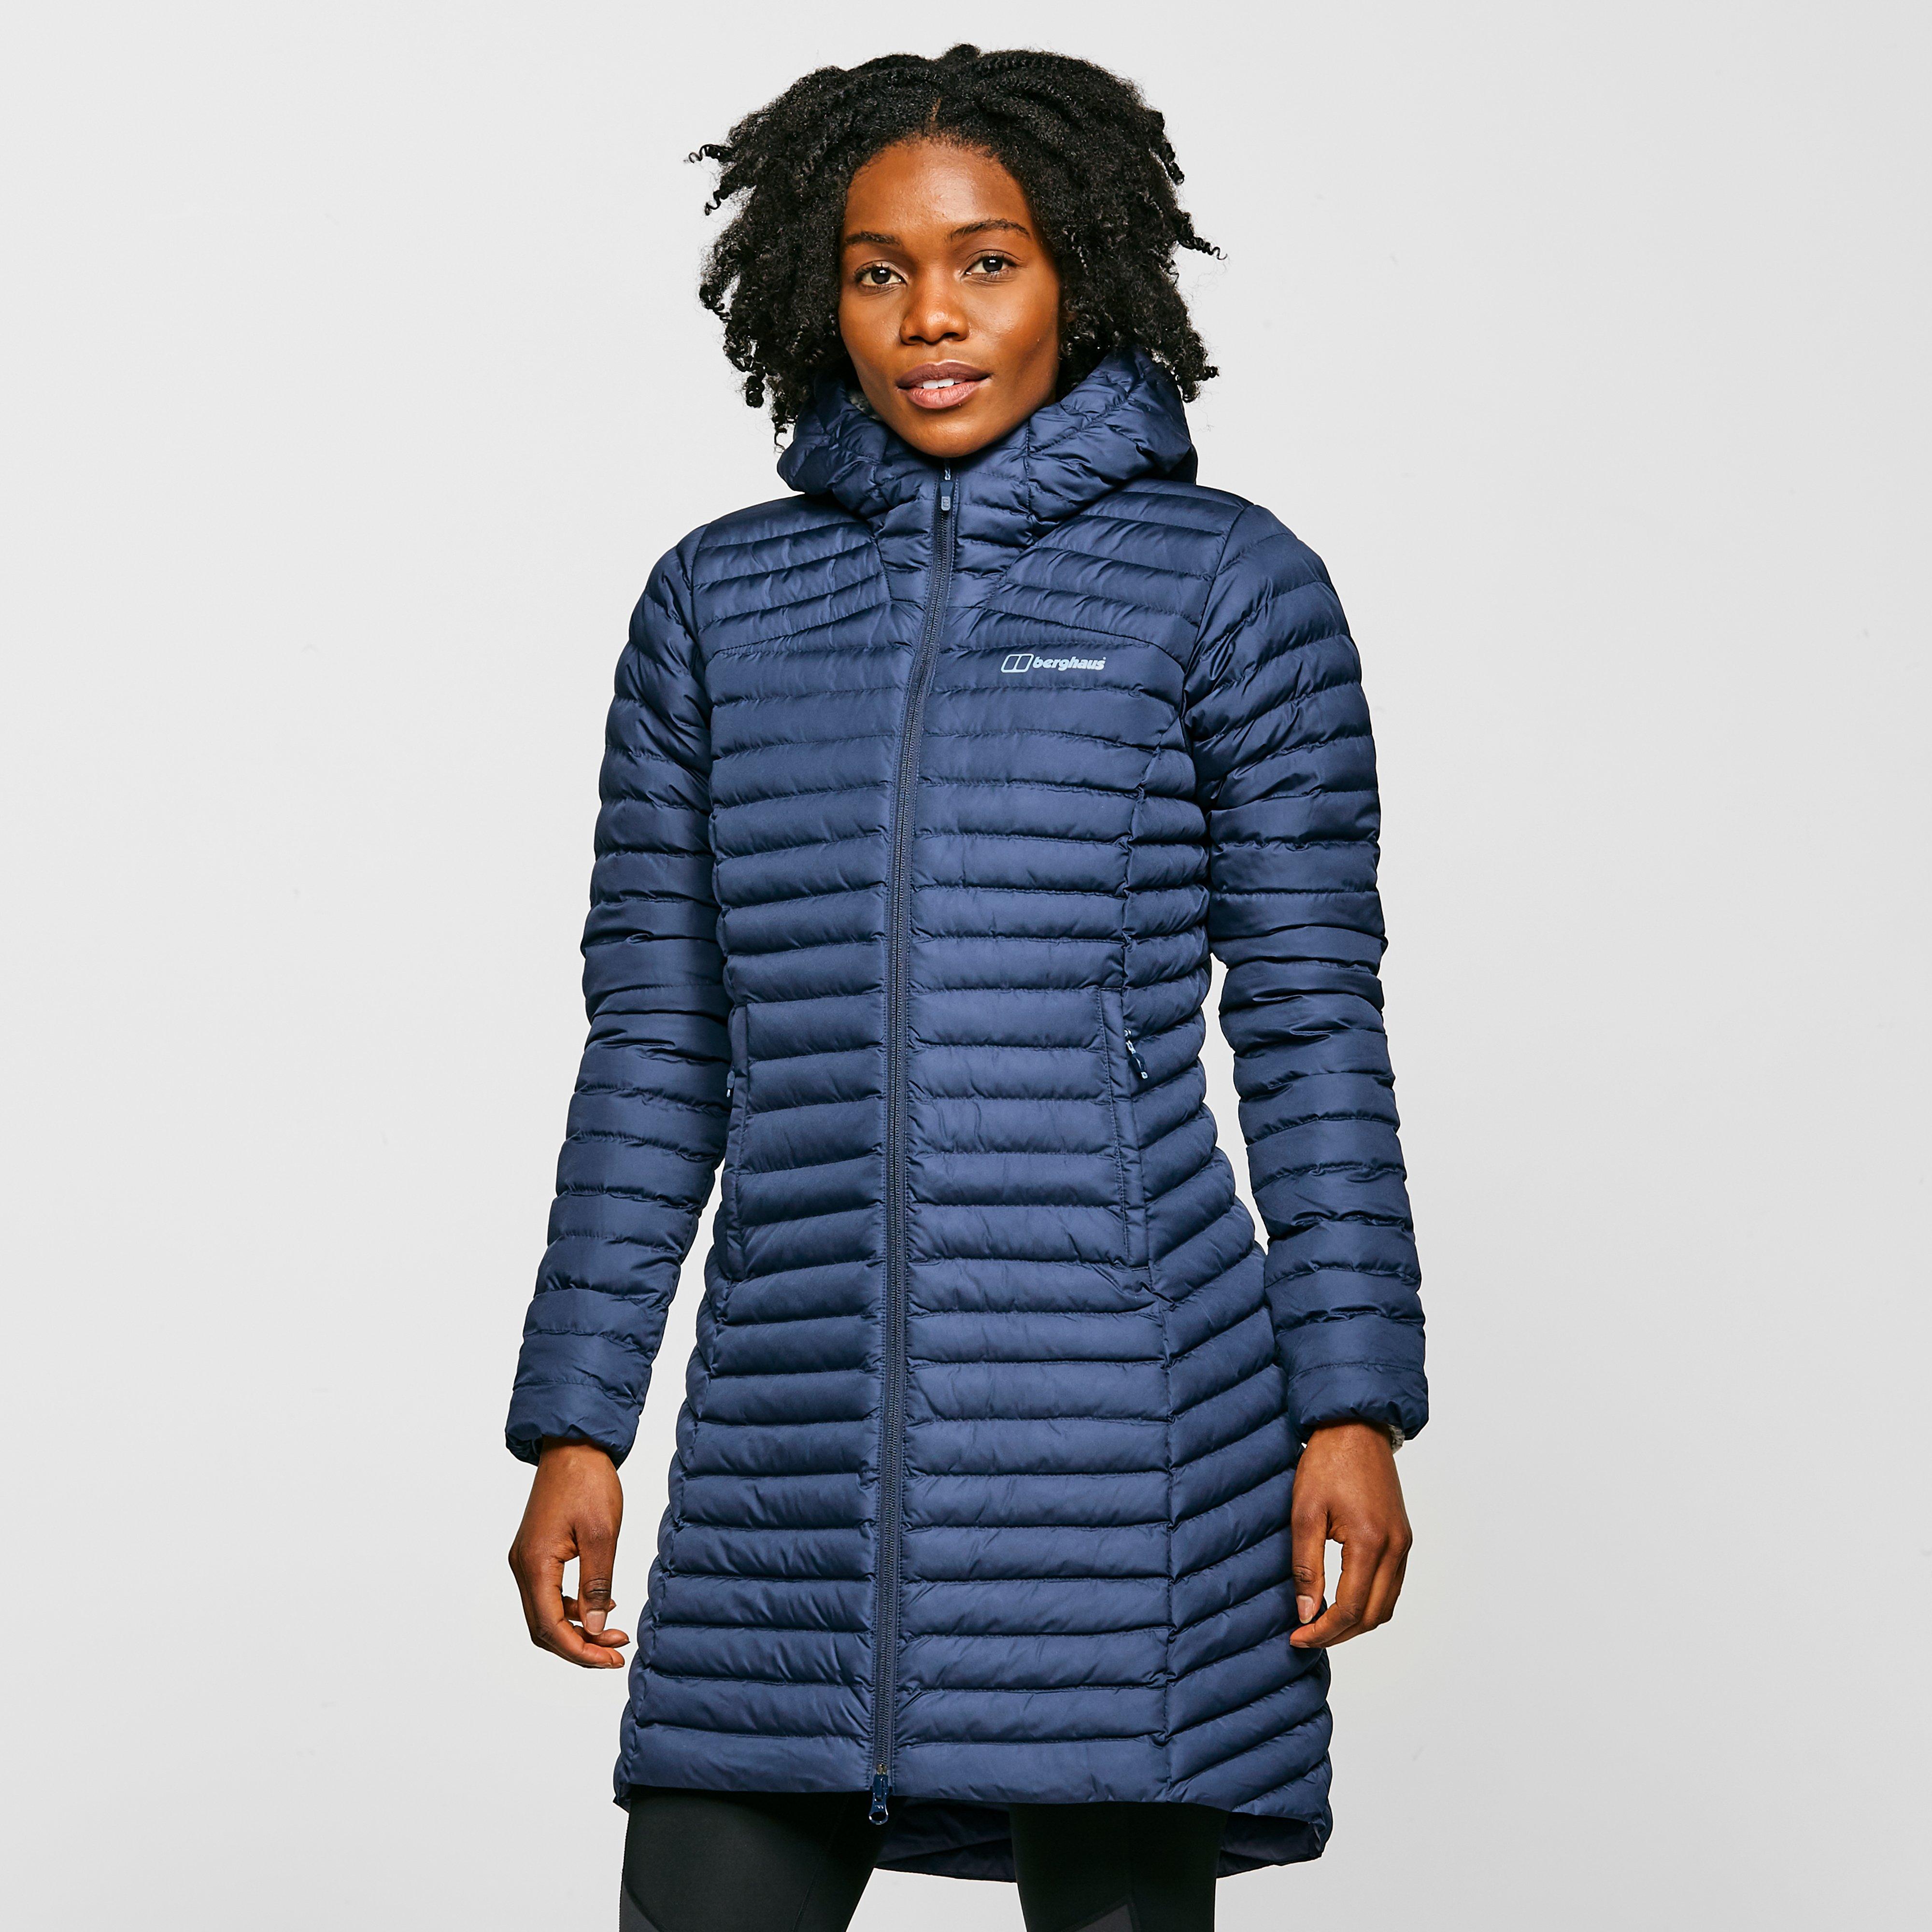 Berghaus Women's Nula Micro Jacket Long Review